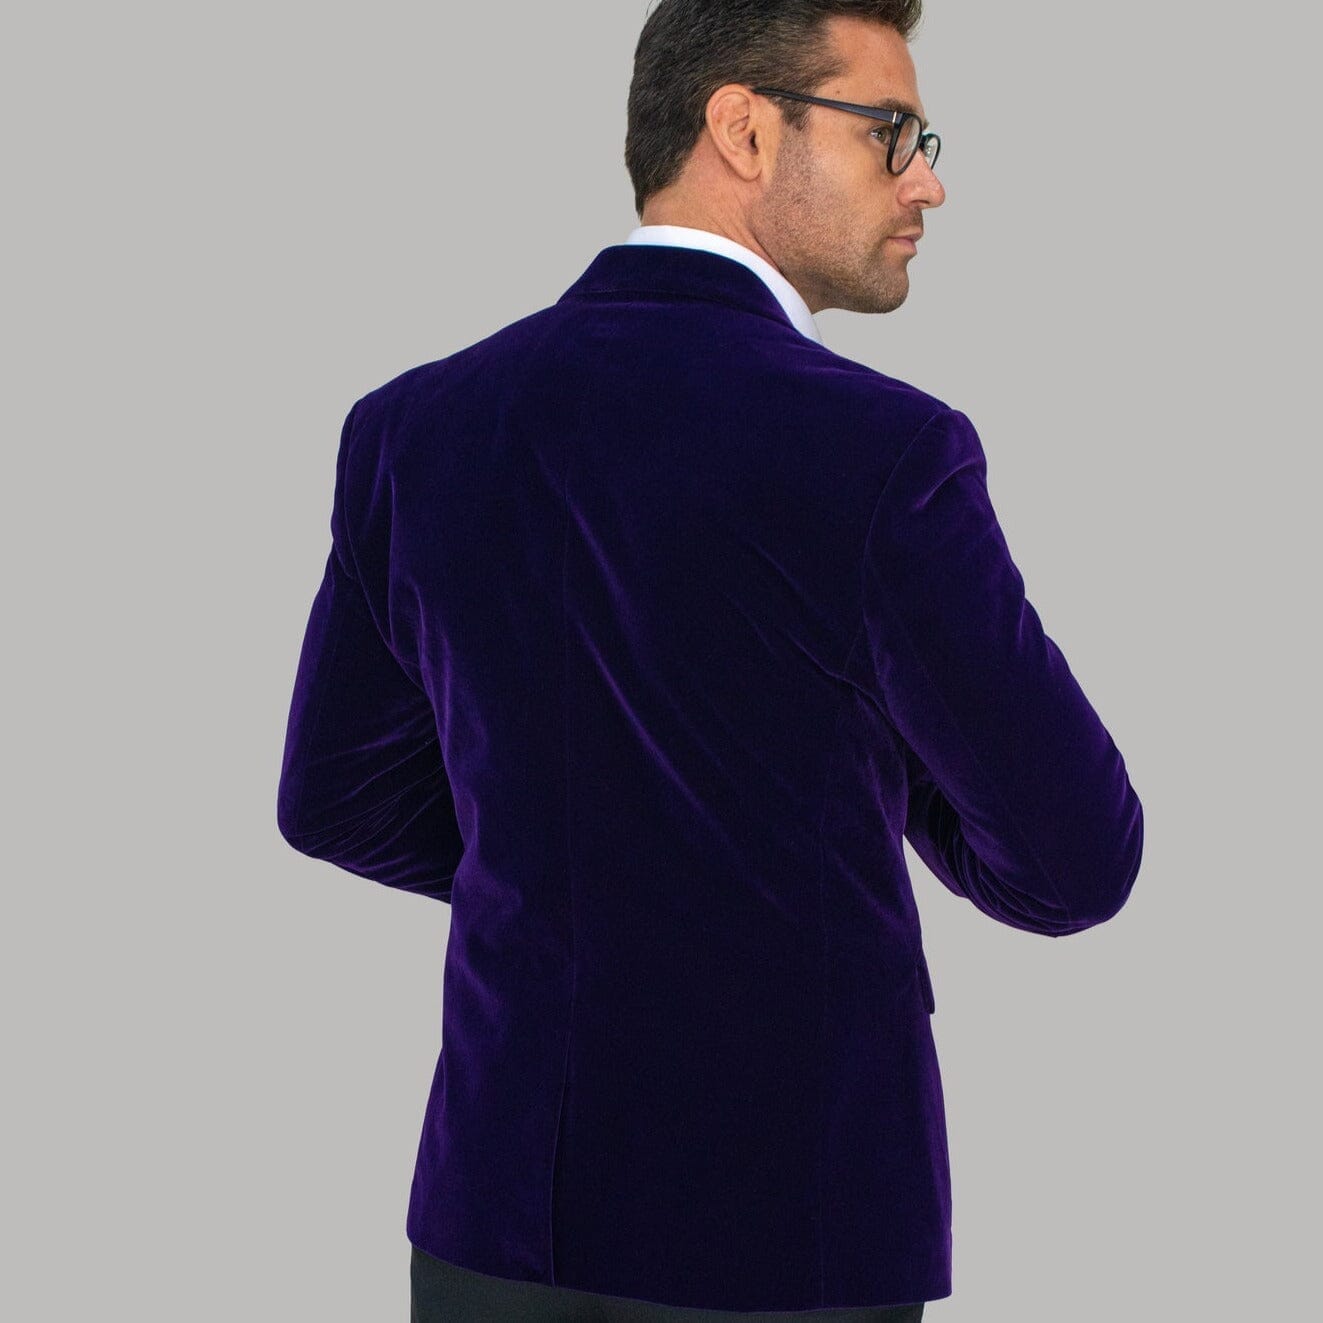 Rosa Purple Velvet 3 Piece Tuxedo Suit - Suits - - THREADPEPPER